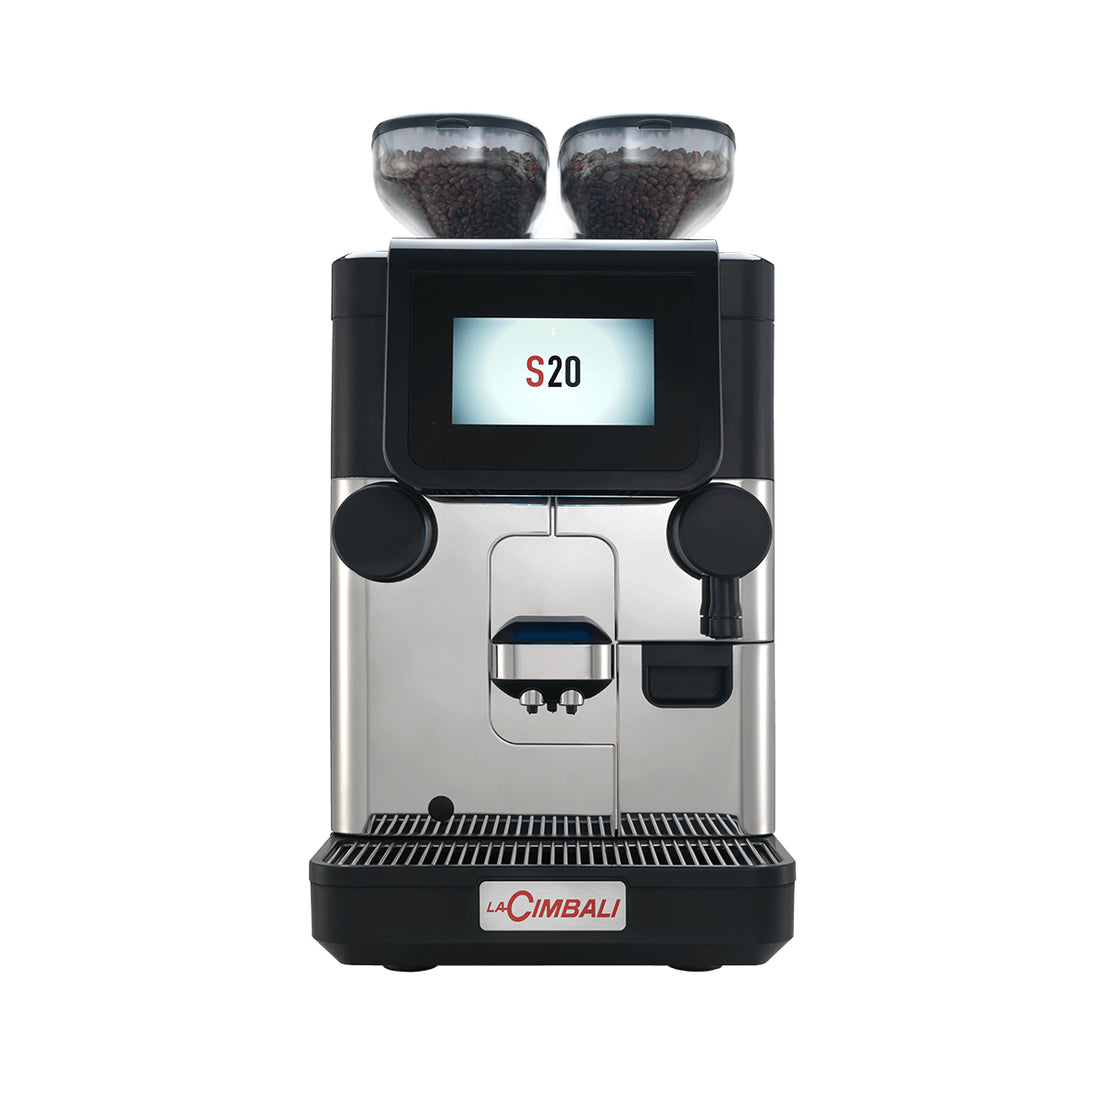 La Cimbali, La Cimbali S20 Bean to Cup Coffee Machine, Redber Coffee